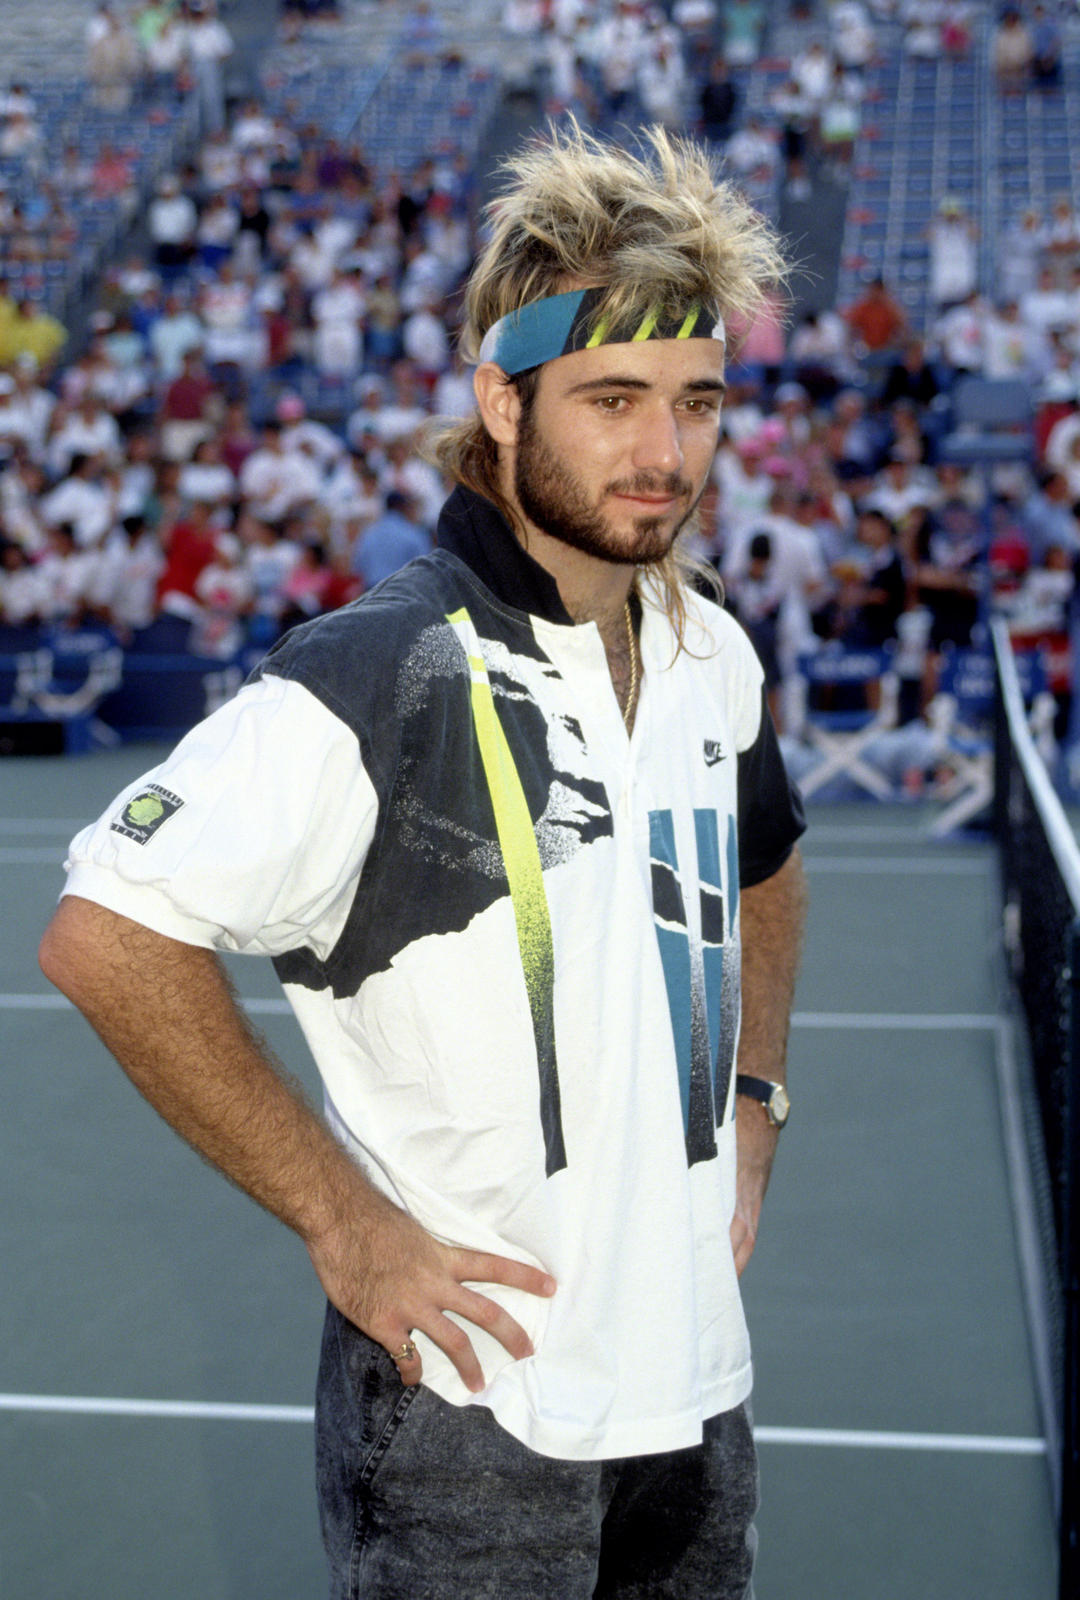 Tennis - Nike lance une collection vintage "Challenge Court" inspirée